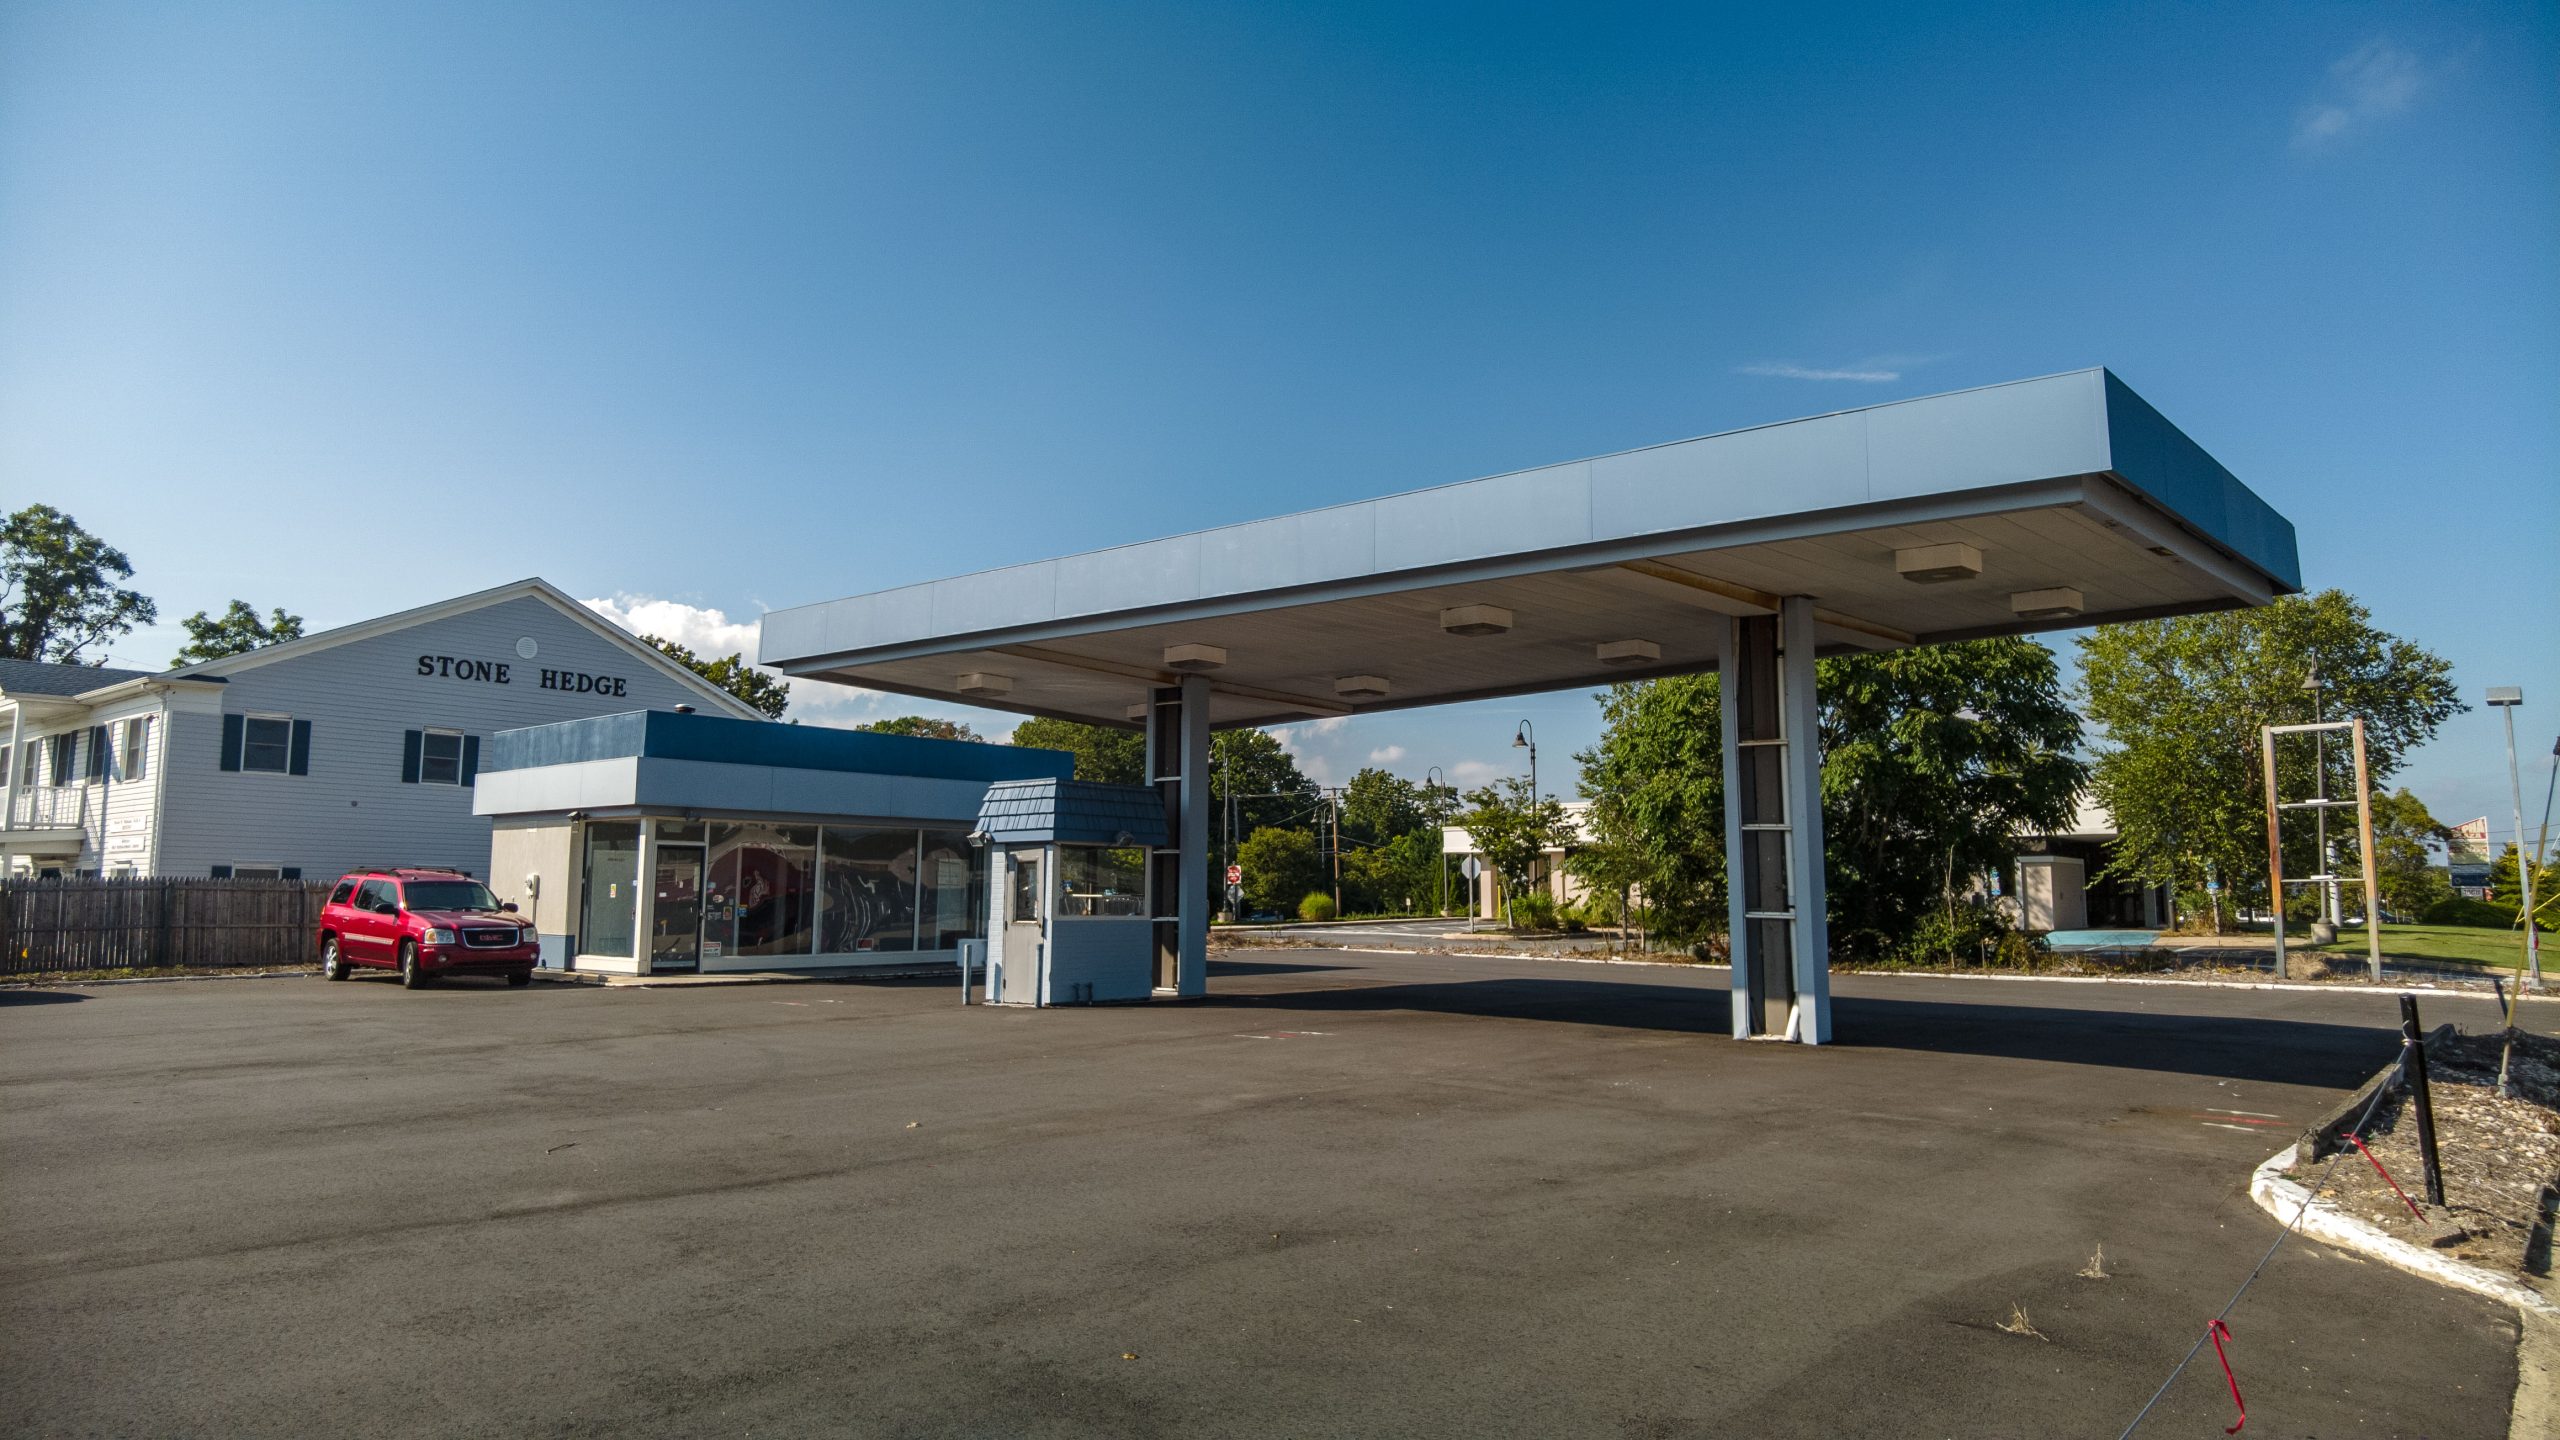 The gas station at 1854 Hooper Avenue, Toms River, N.J., Sept. 2022. (Photo: Daniel Nee)